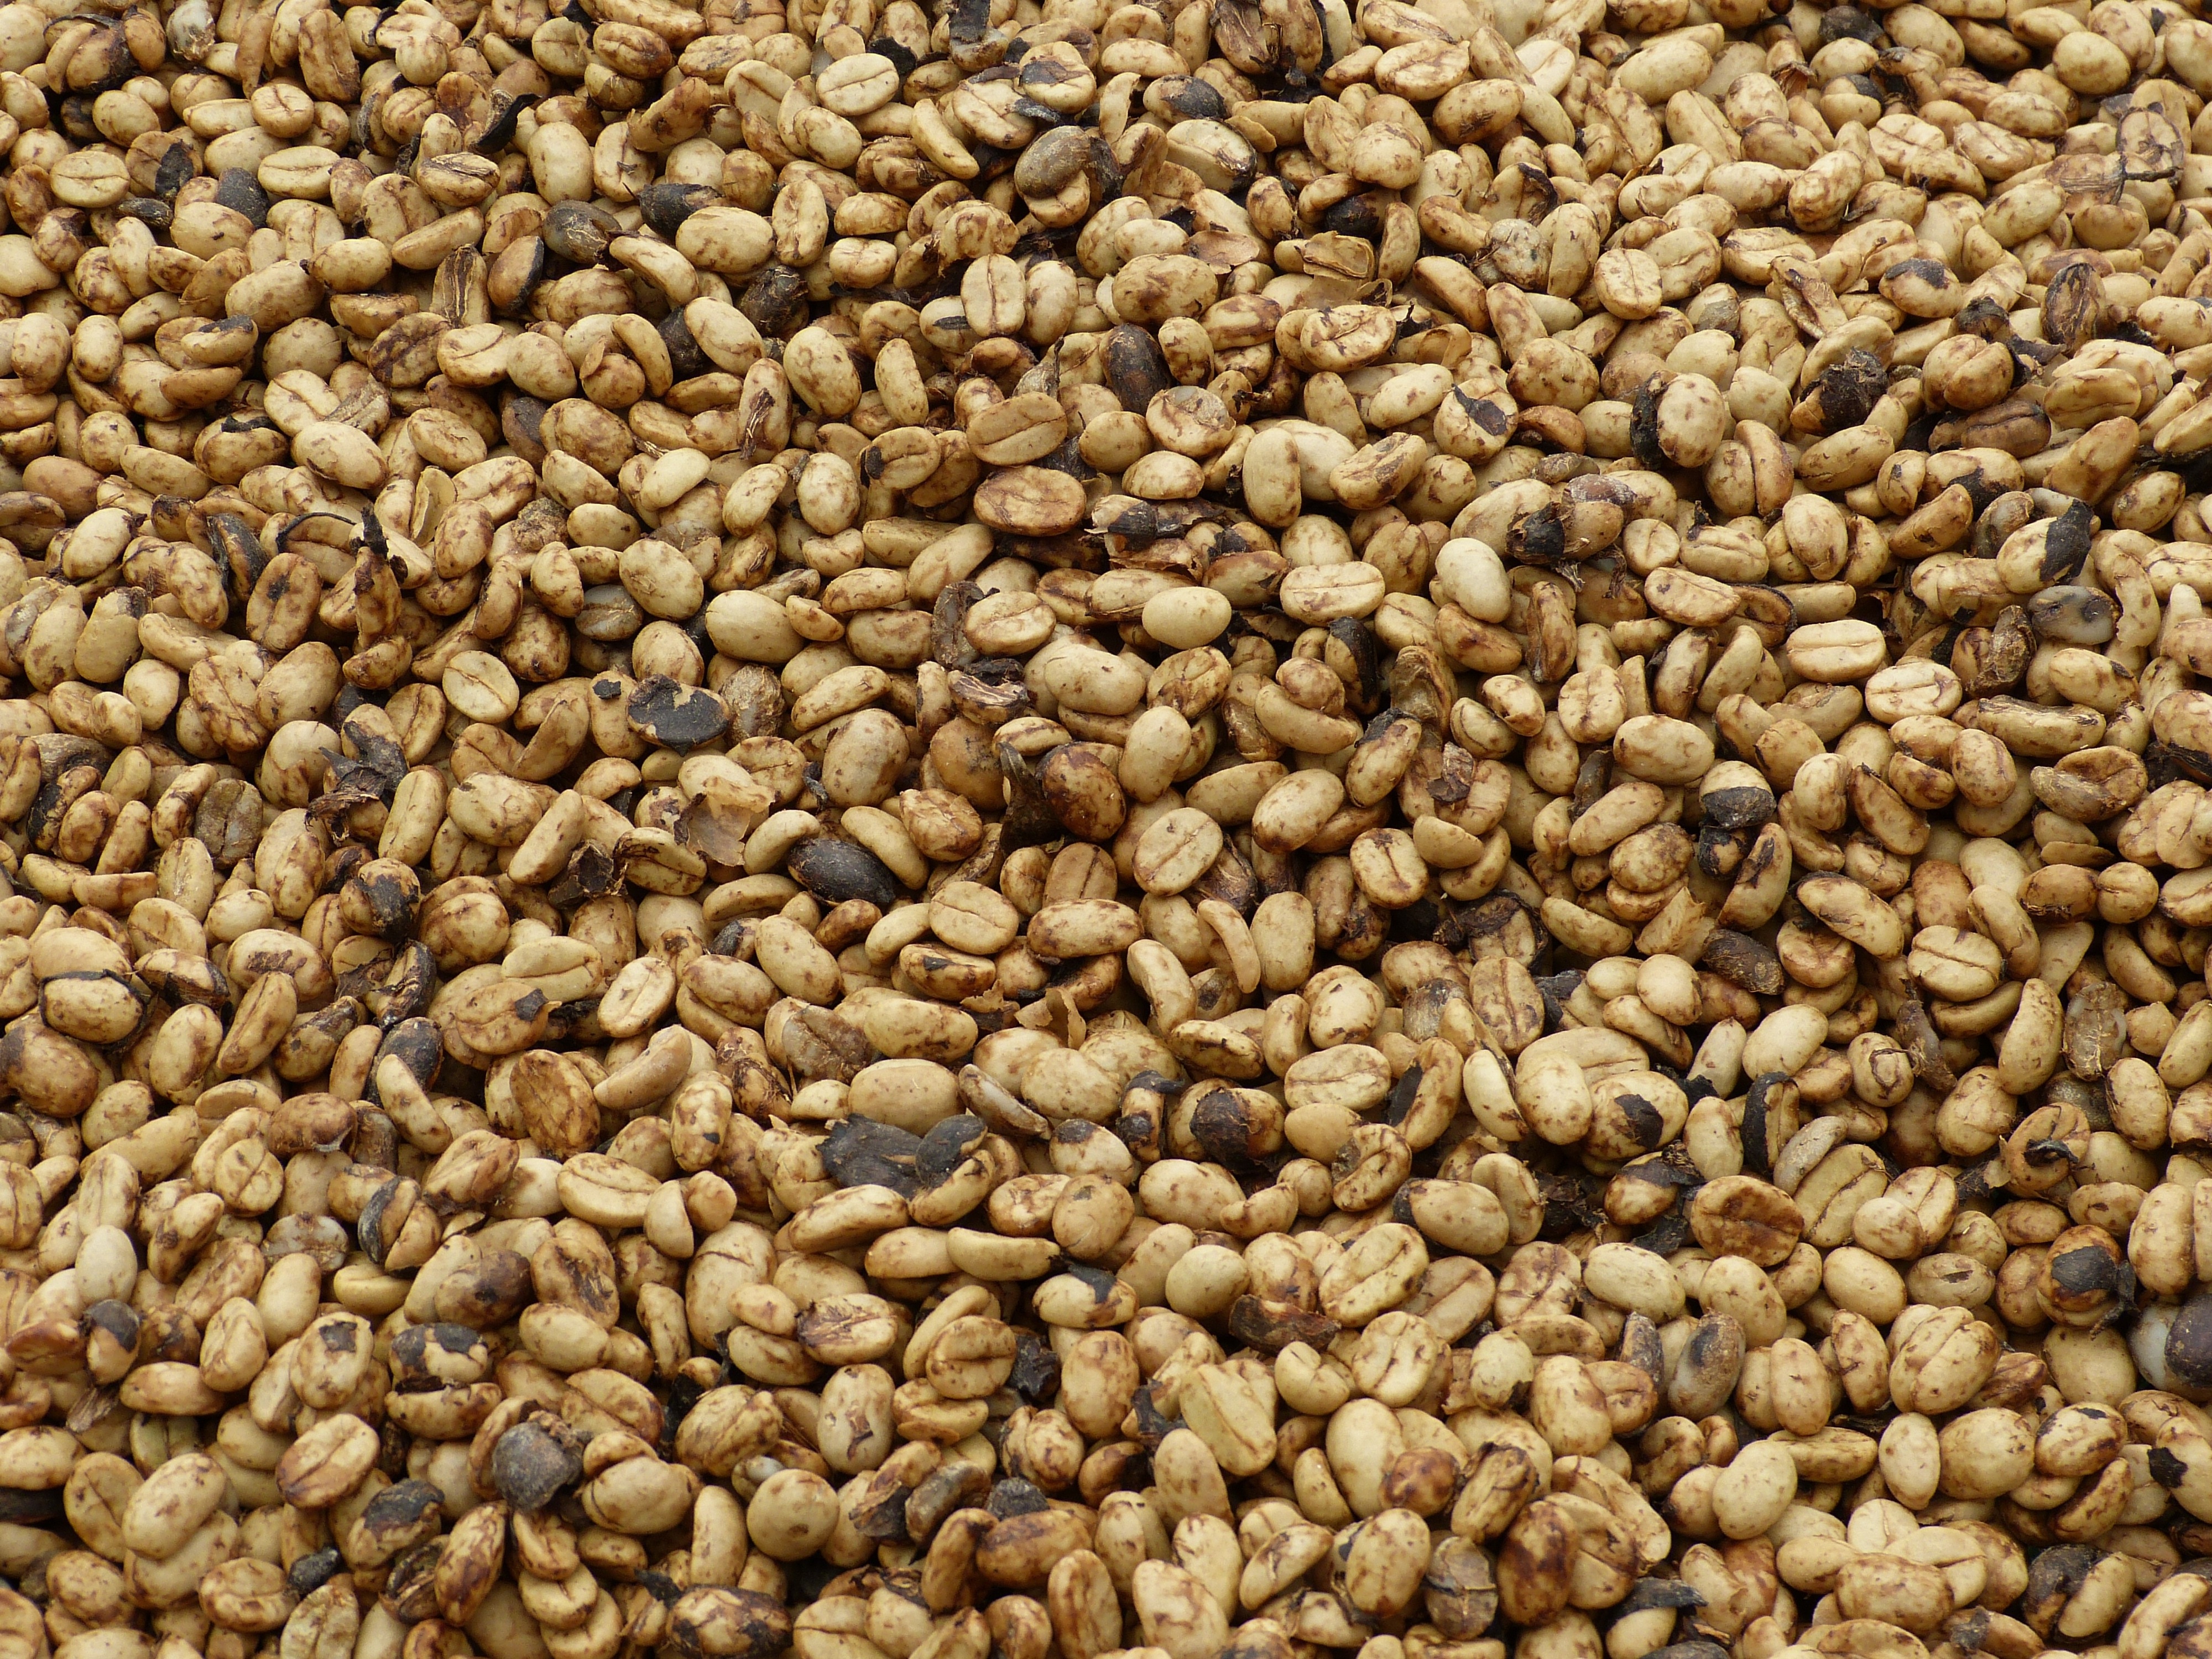 brown coffee beans